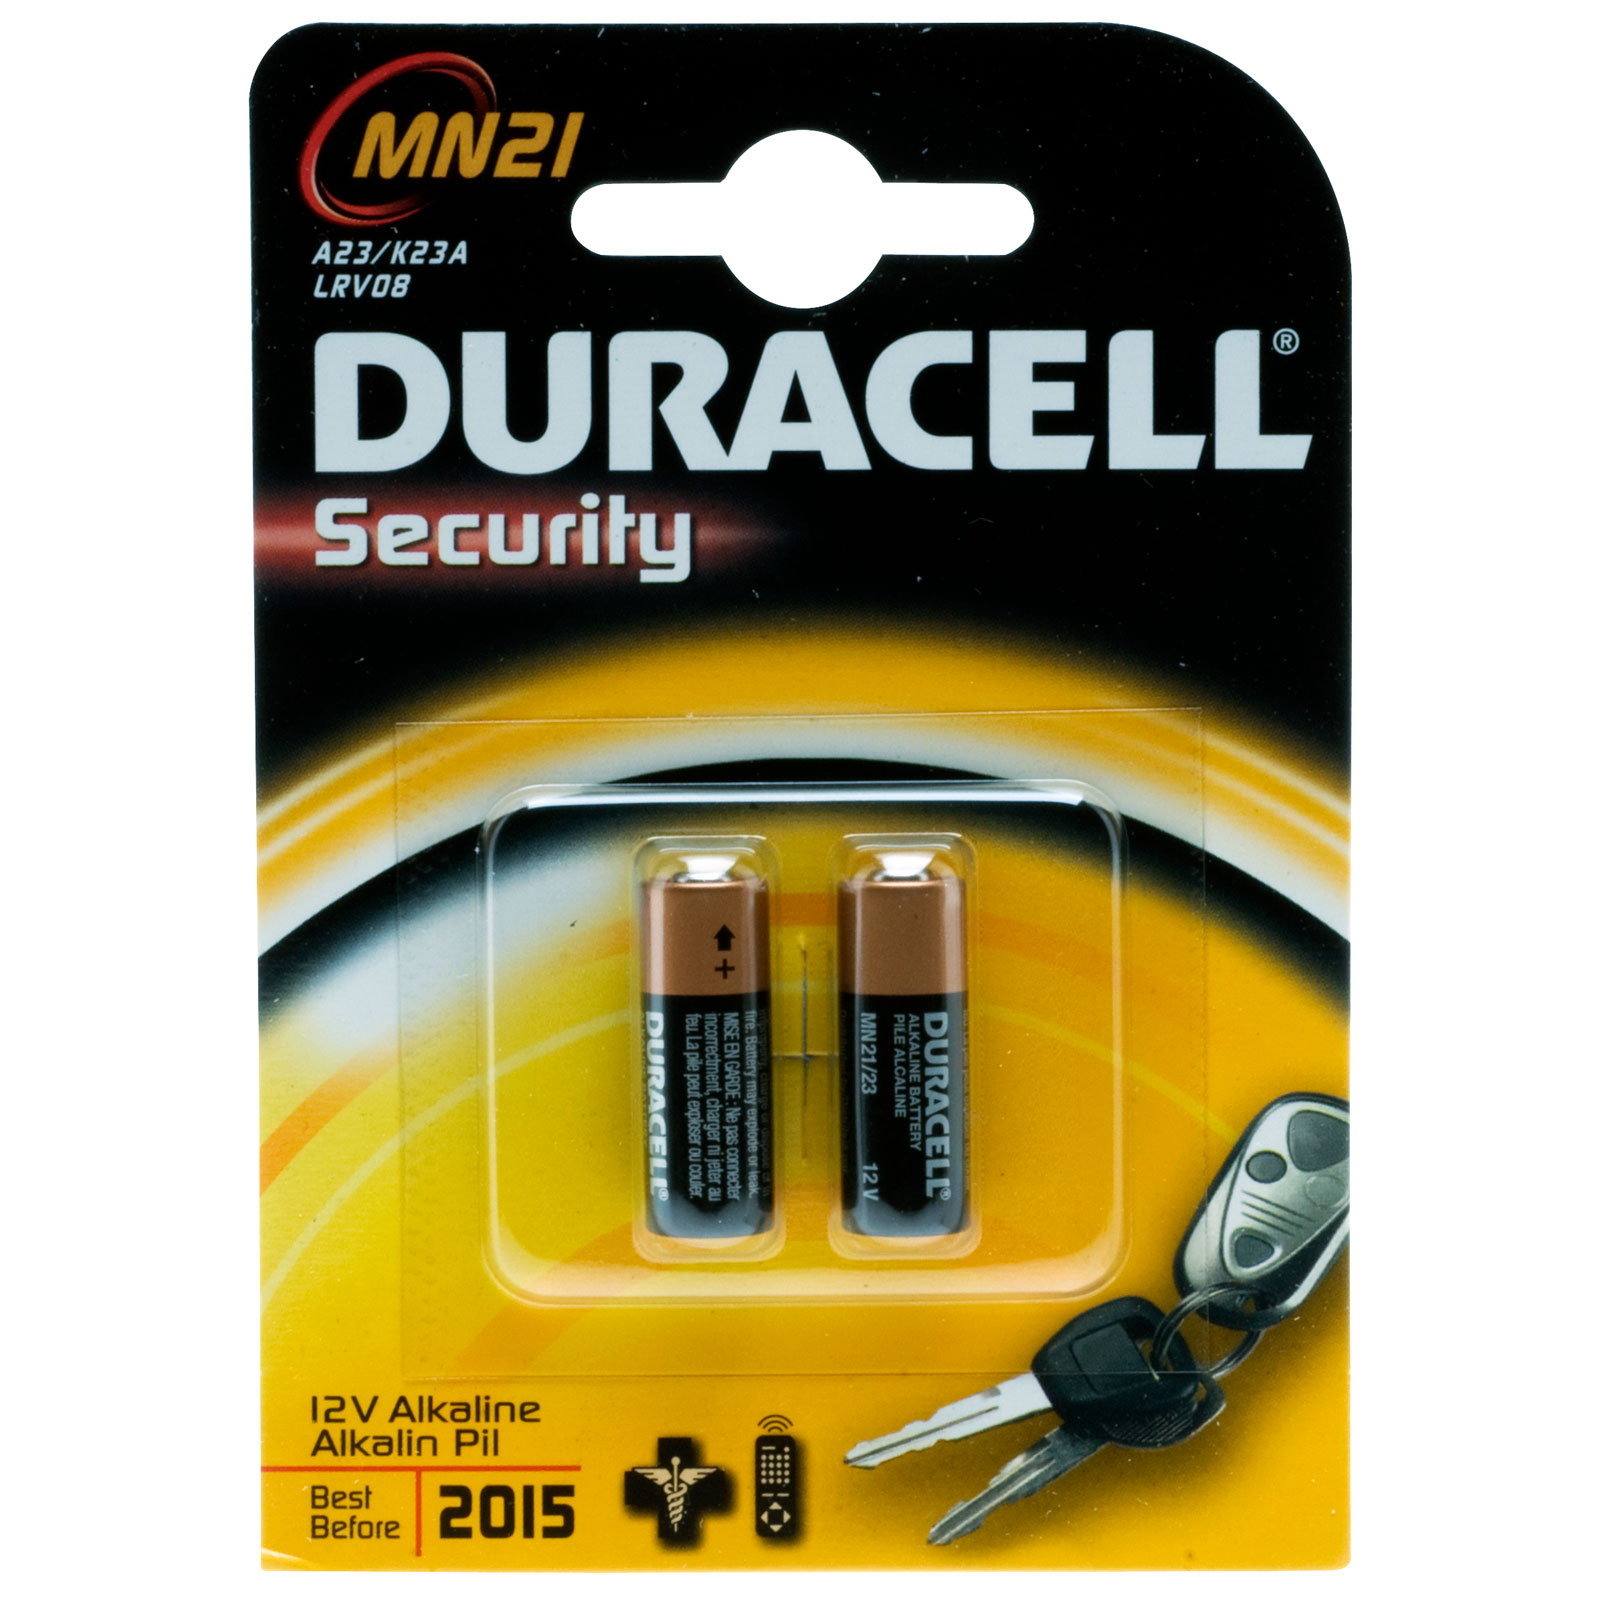 Pack of 2 batteries 5000394203969 Duracell NEW Duracell MN21 Alkaline Batteries A23 LRV08 12V 